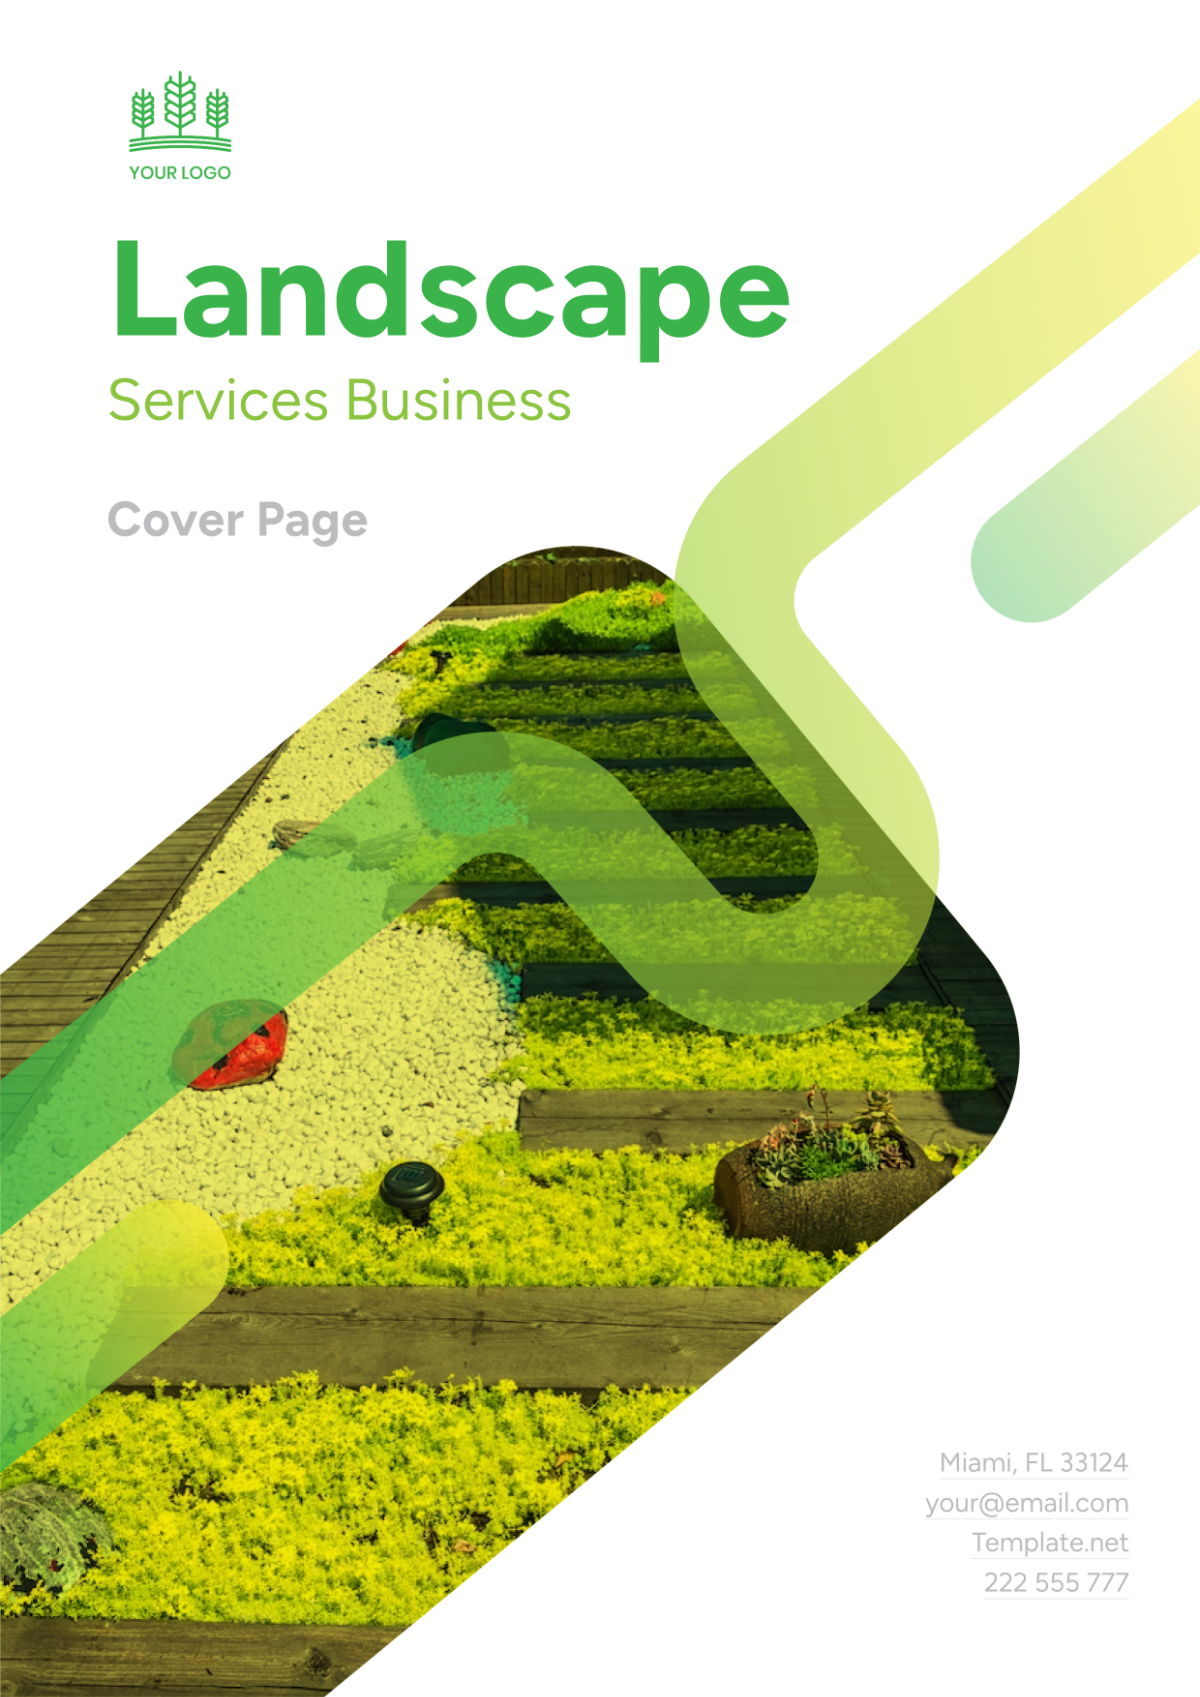 Landscape Services Business Cover Page